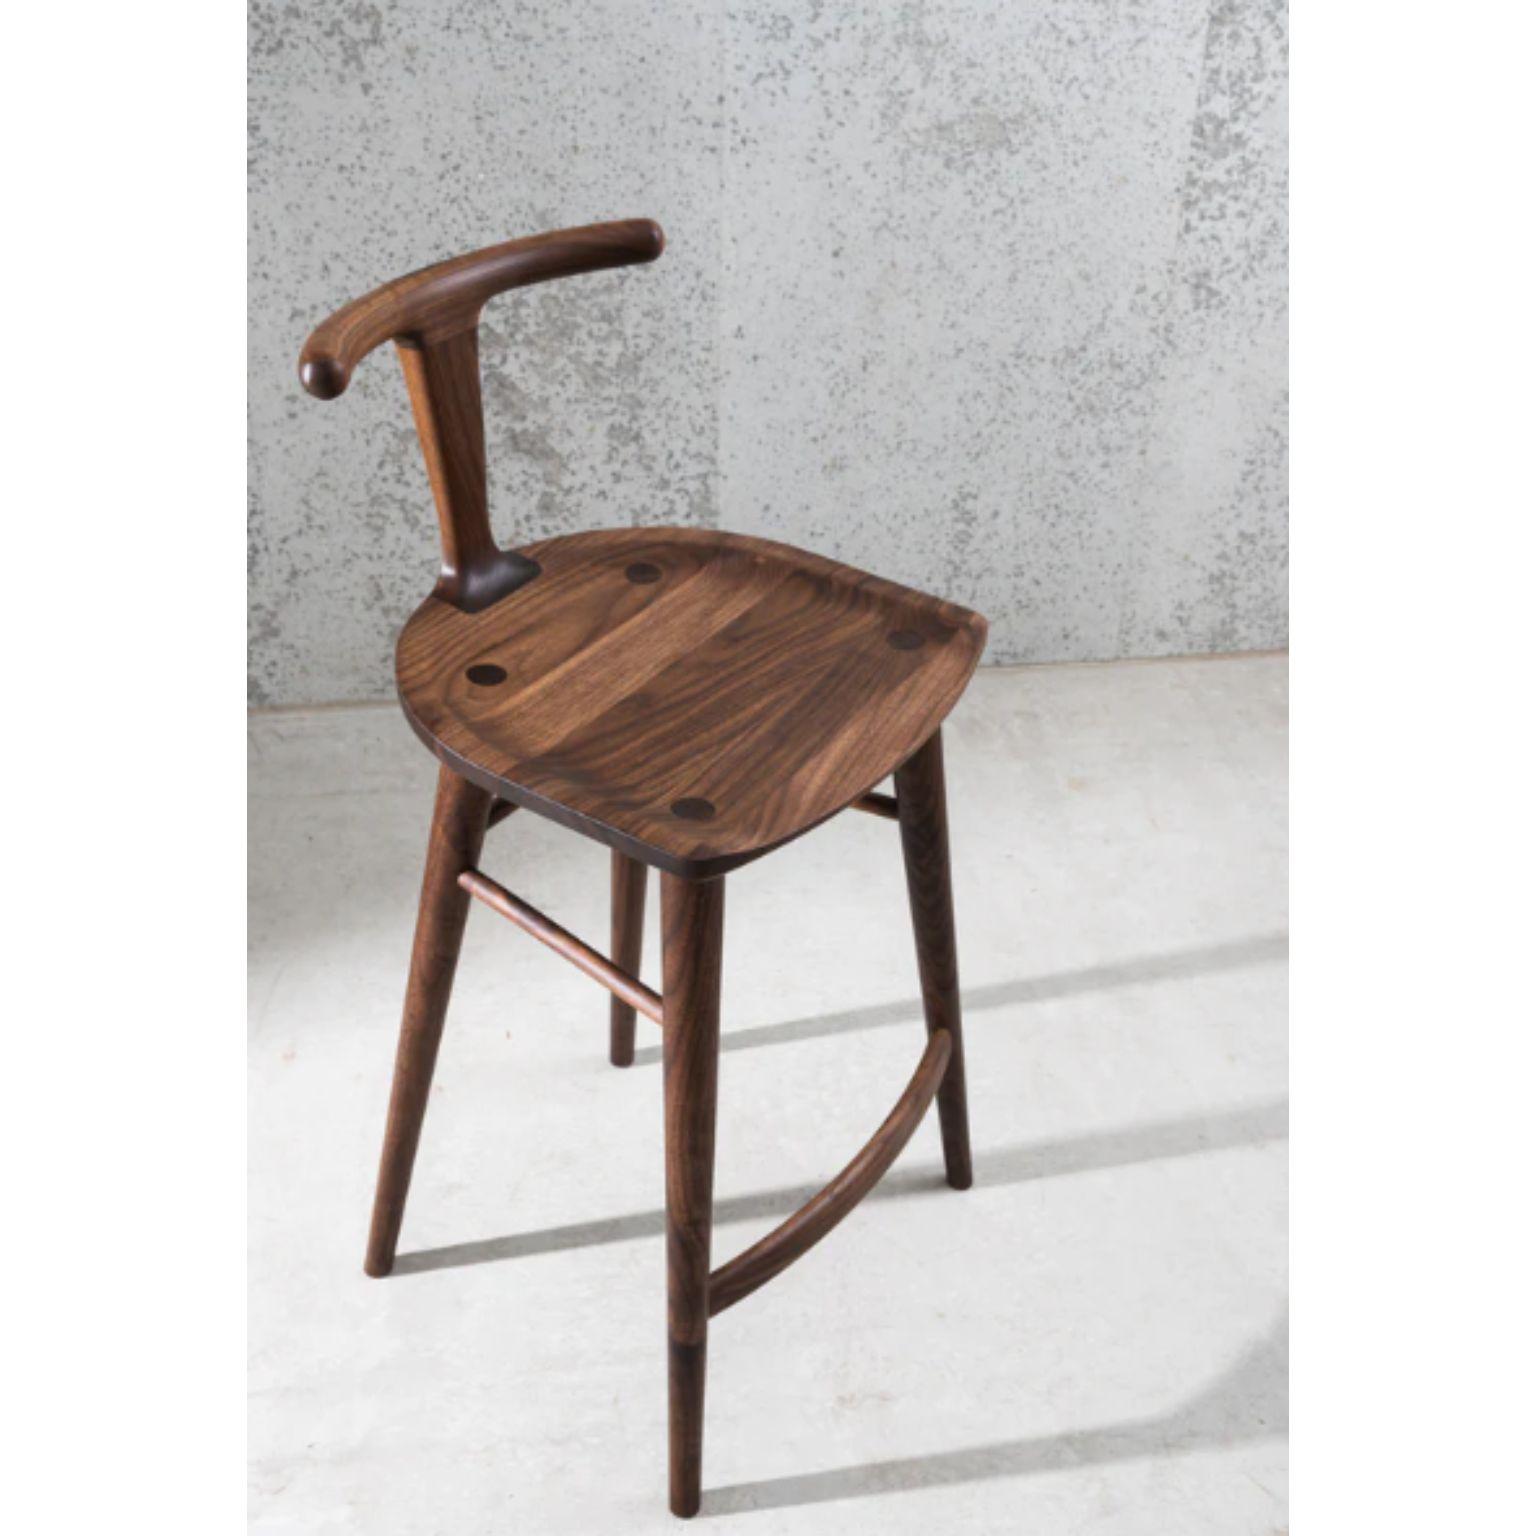 Walnut oxbend stool by Fernweh Woodworking
Dimensions: 
Seat: W 17